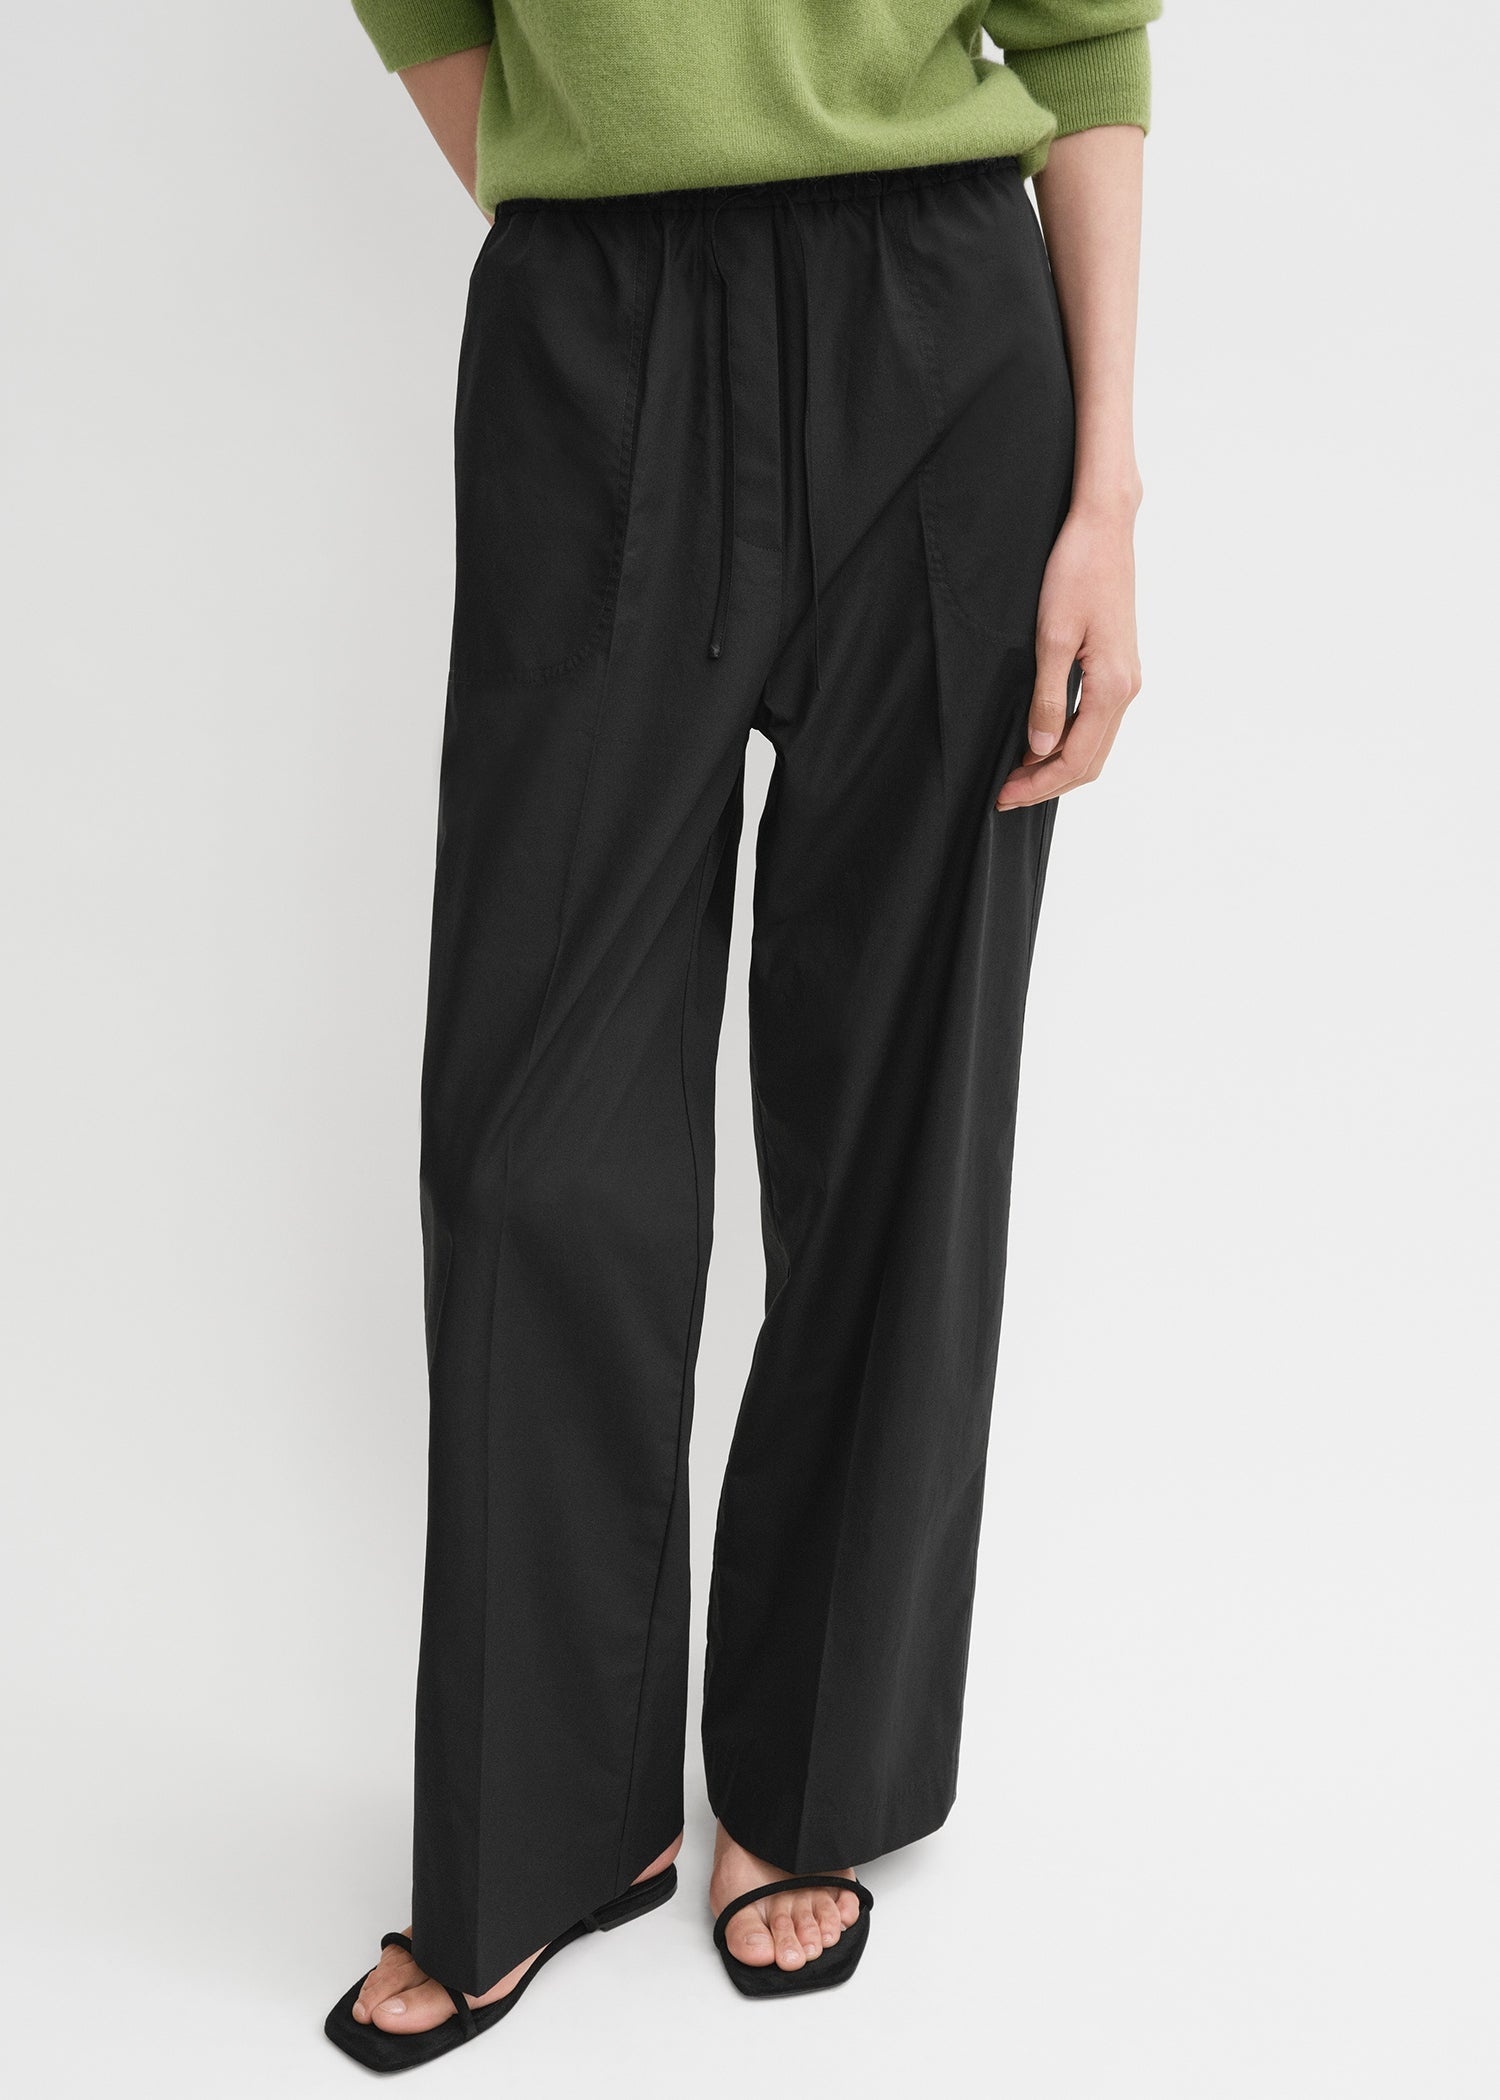 Cotton drawstring trousers black - 5